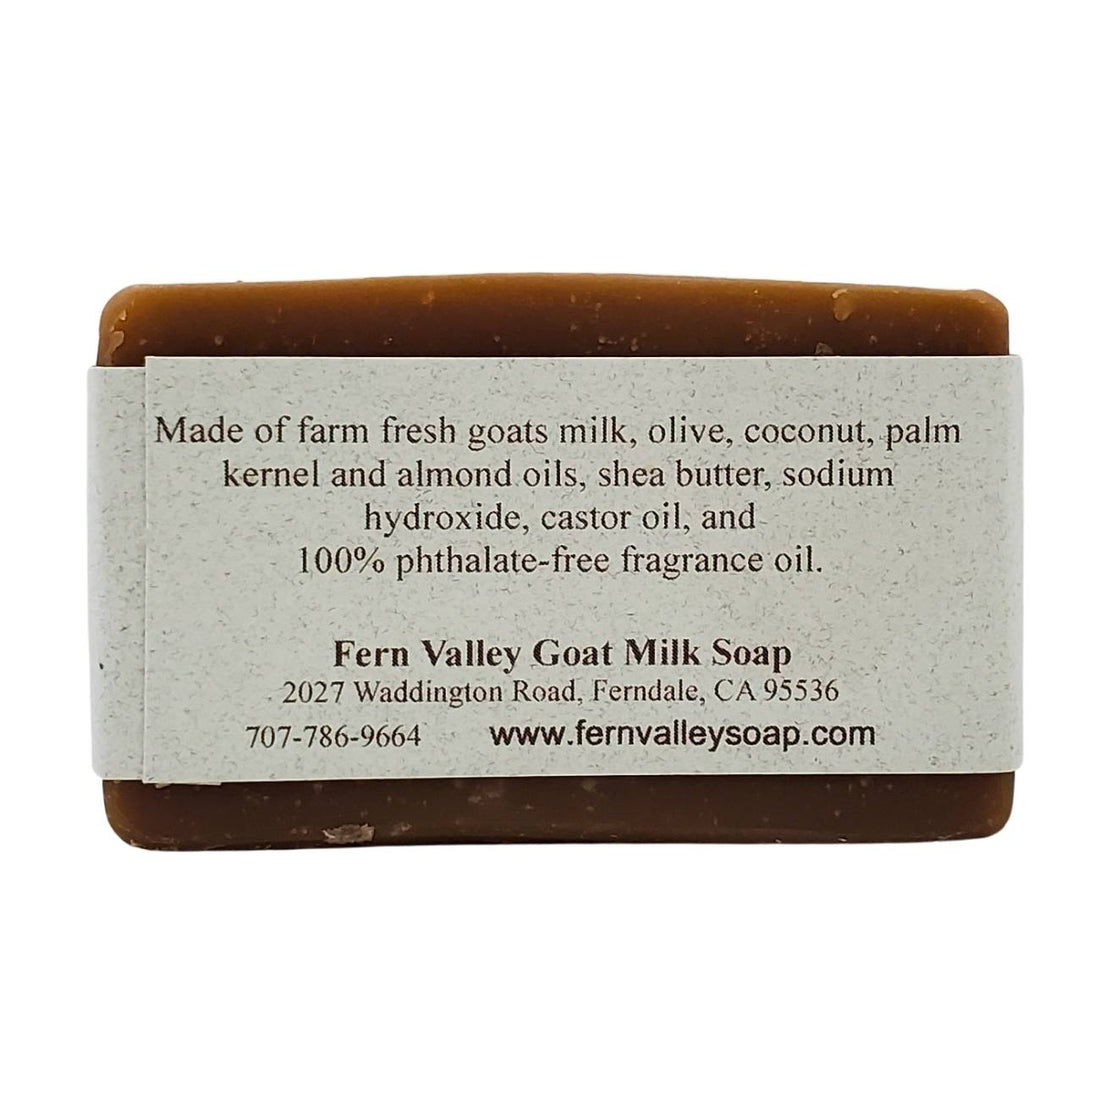 Handmade Goat Milk Soap | Shower Bar | Spiced Mahogany